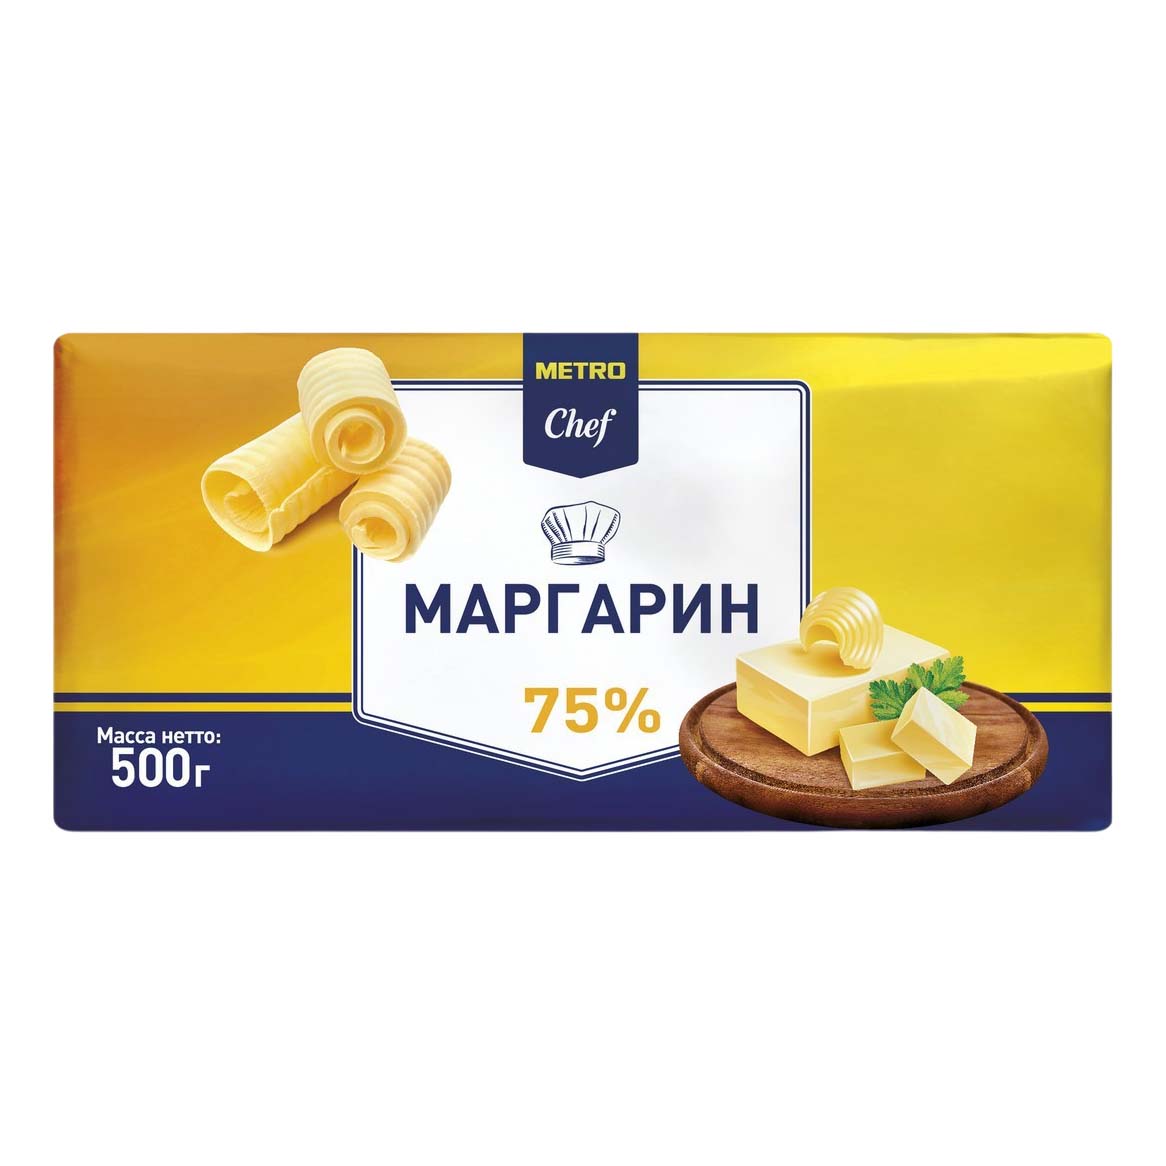 Маргарин Metro Chef 75% 500 г